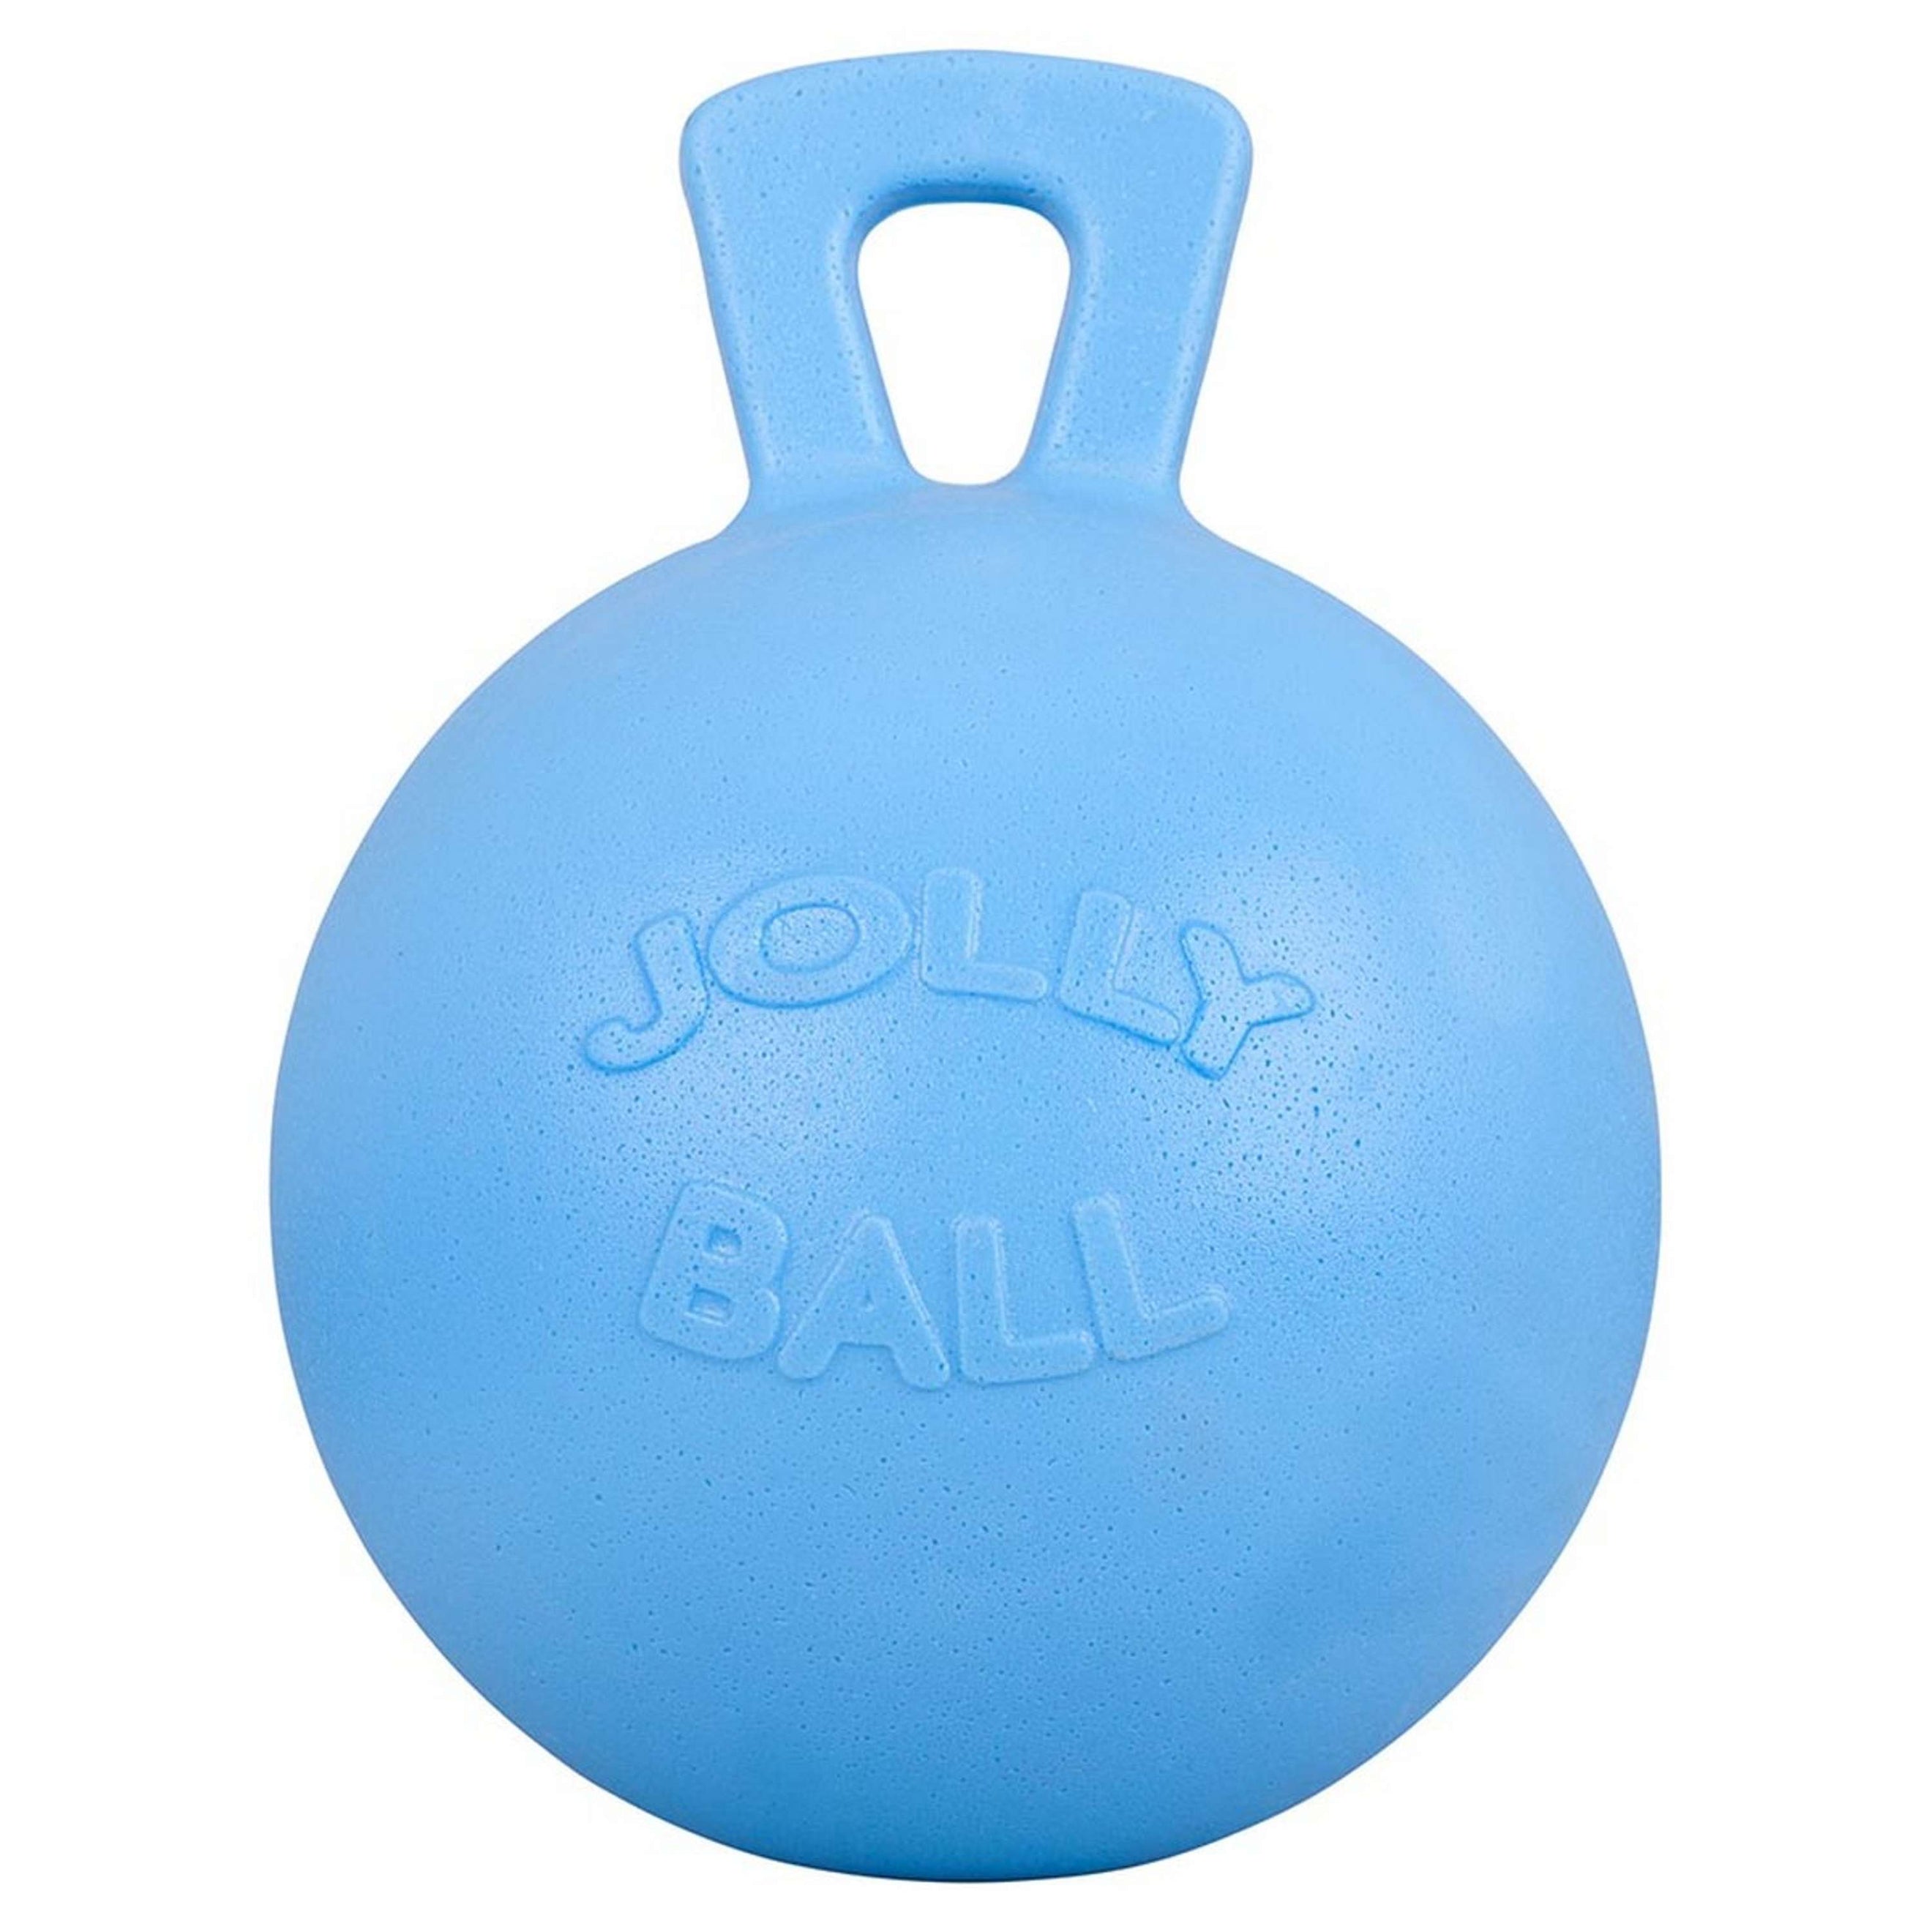 Jolly Ball Balle de Jeu Paysage de myrtilles/Baby Bleu